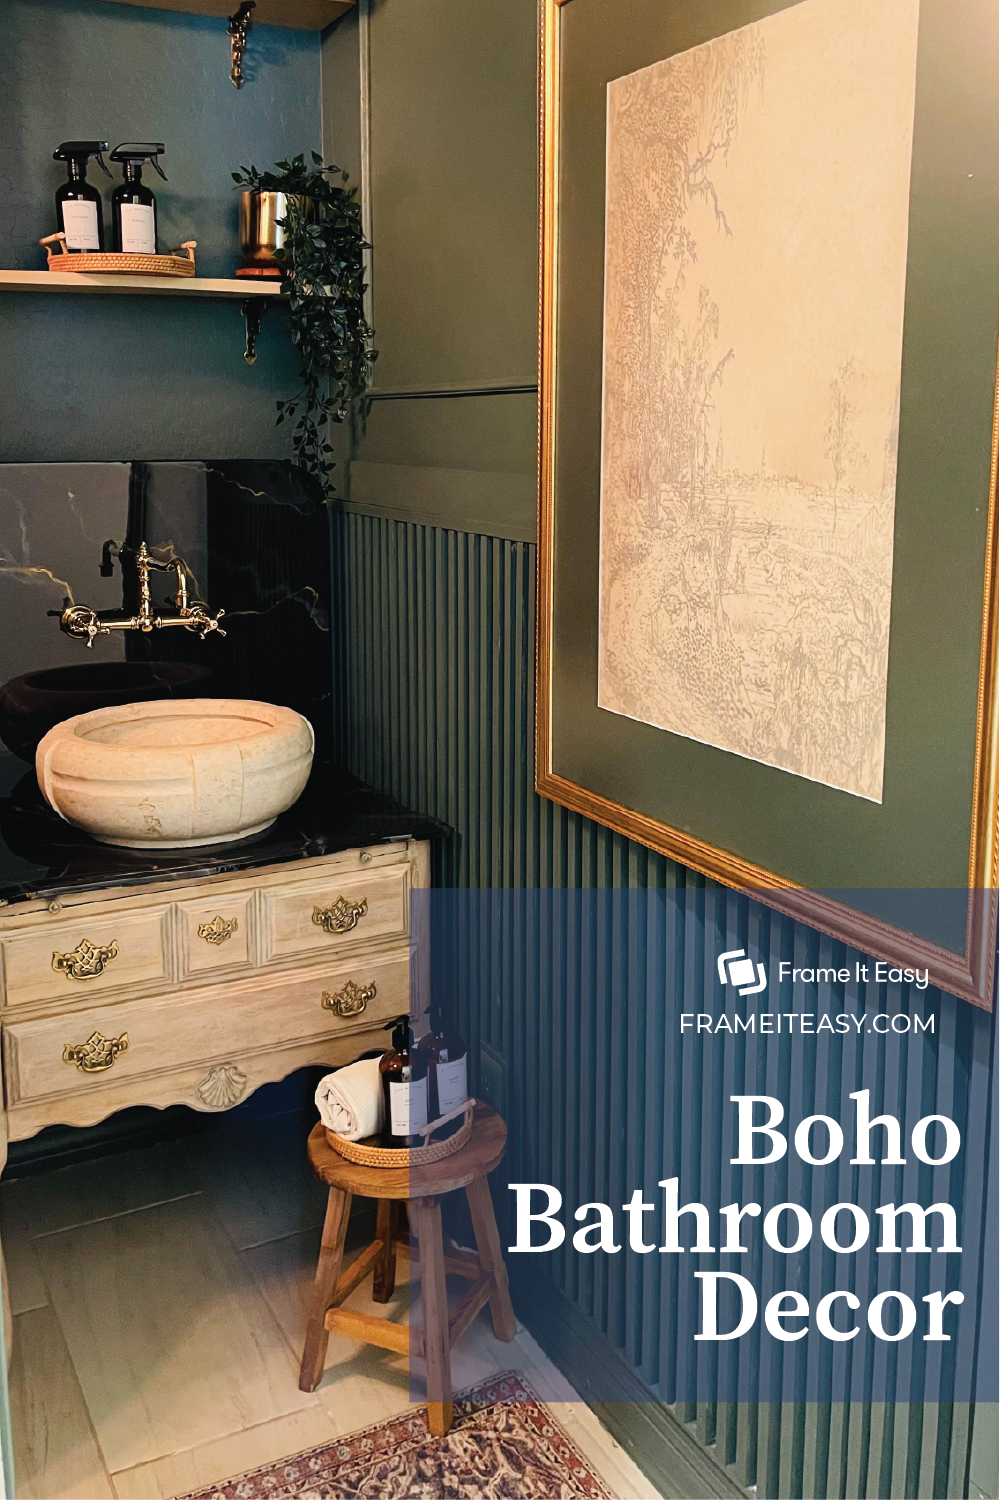 Boho Bathroom Decor- A darn green, earth-toned bathroom with mixed patterns, textures, and plants showcases a few basics for Boho bathroom decor.